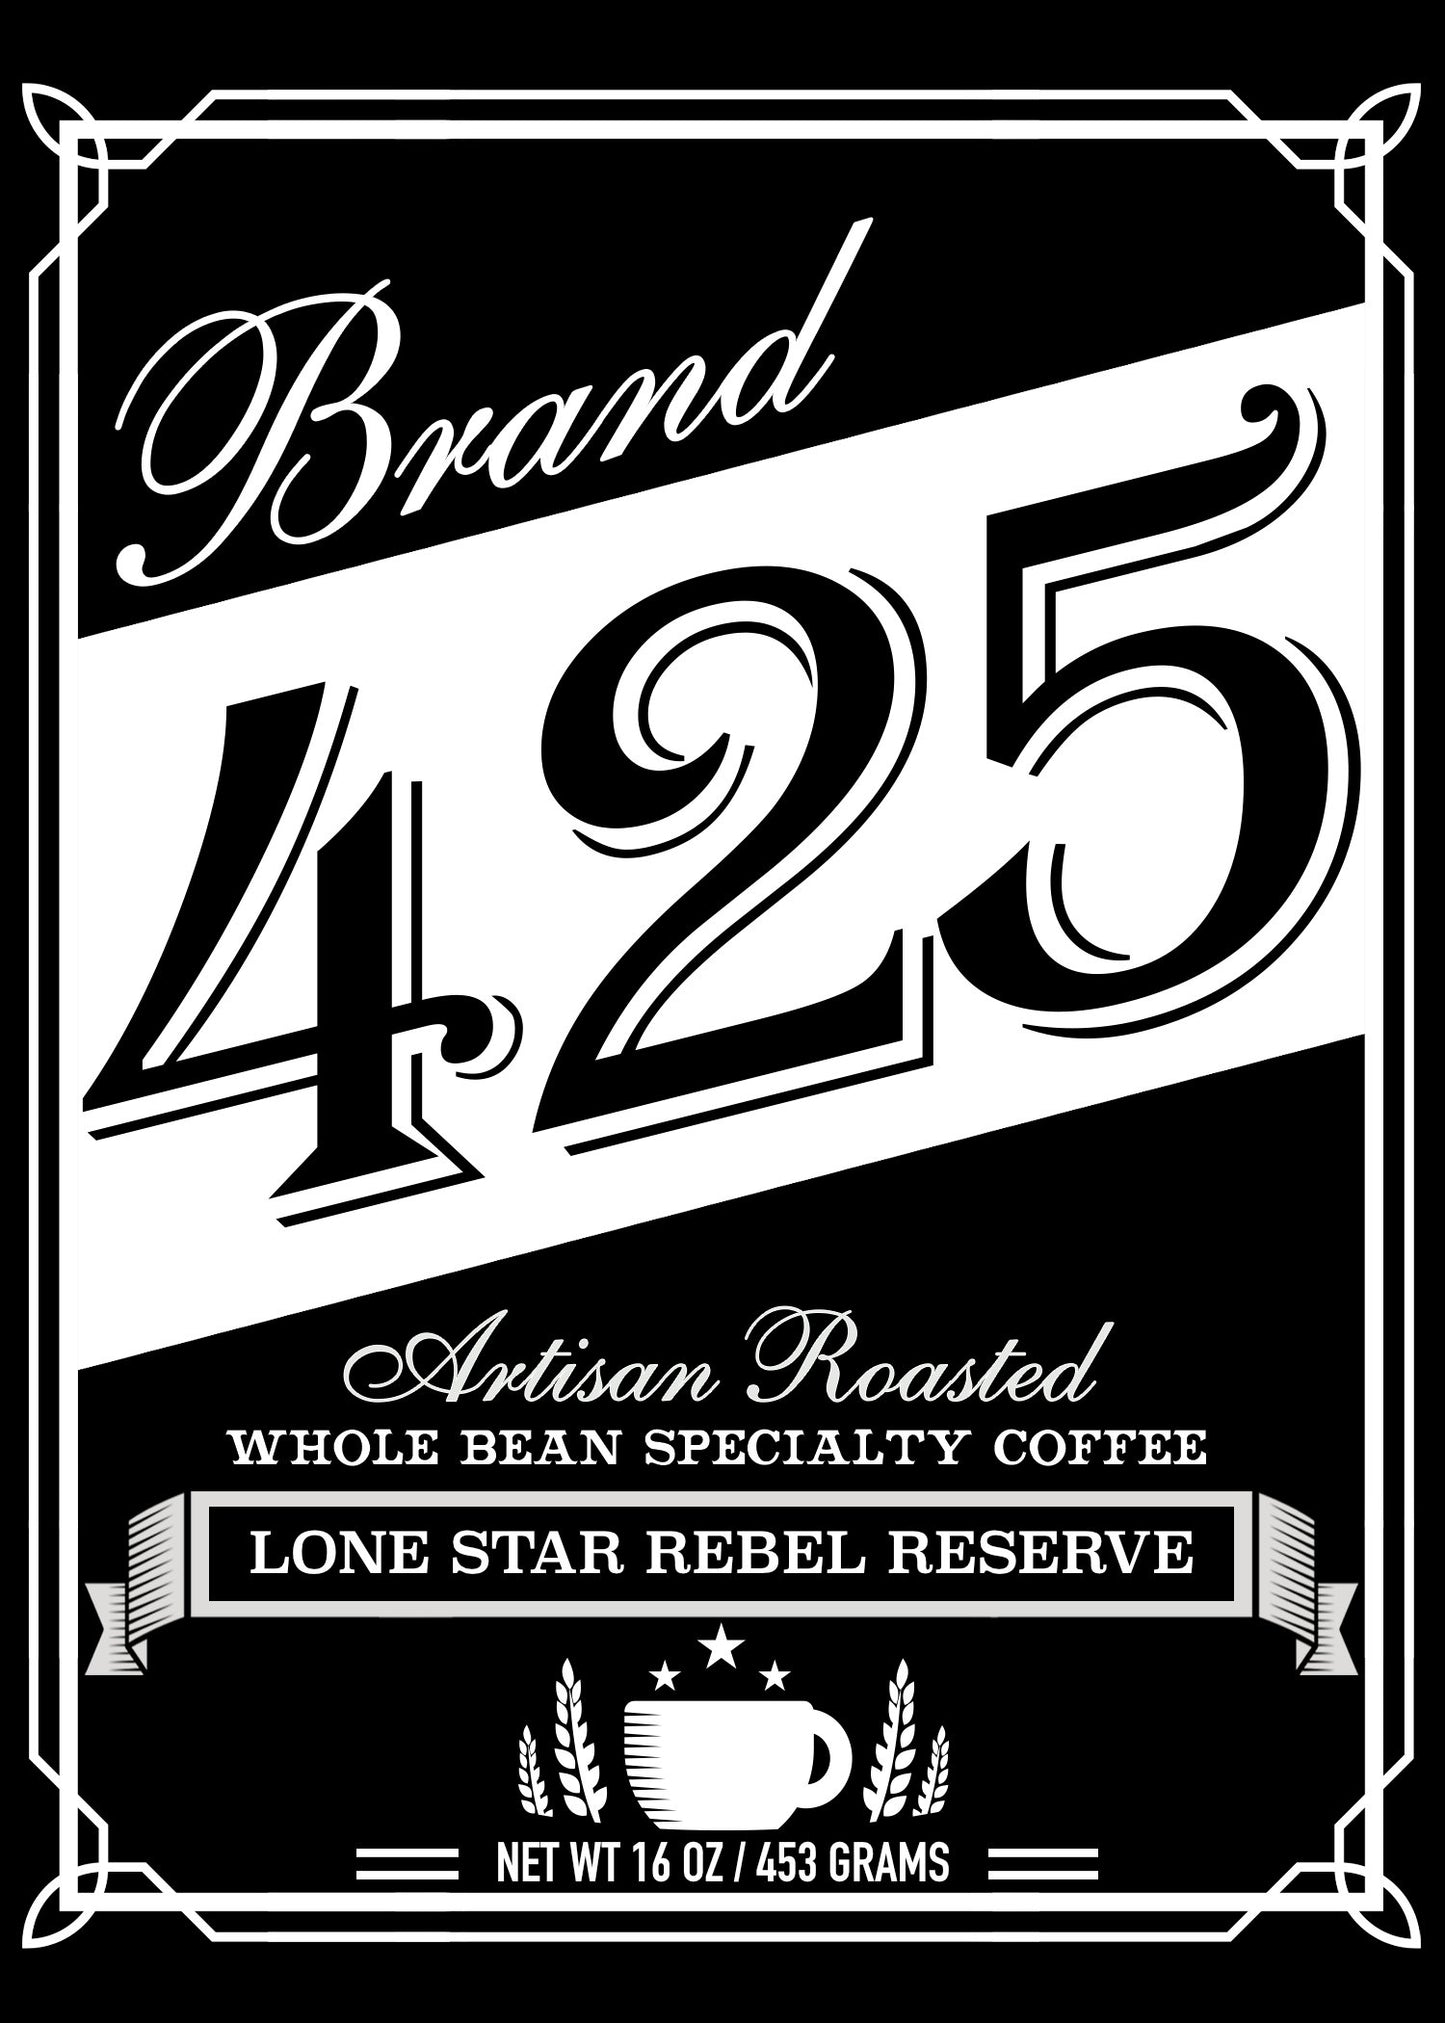 Texas Specialty Coffee Roasters Lone Star Rebel Reserve Texas Craft Coffee